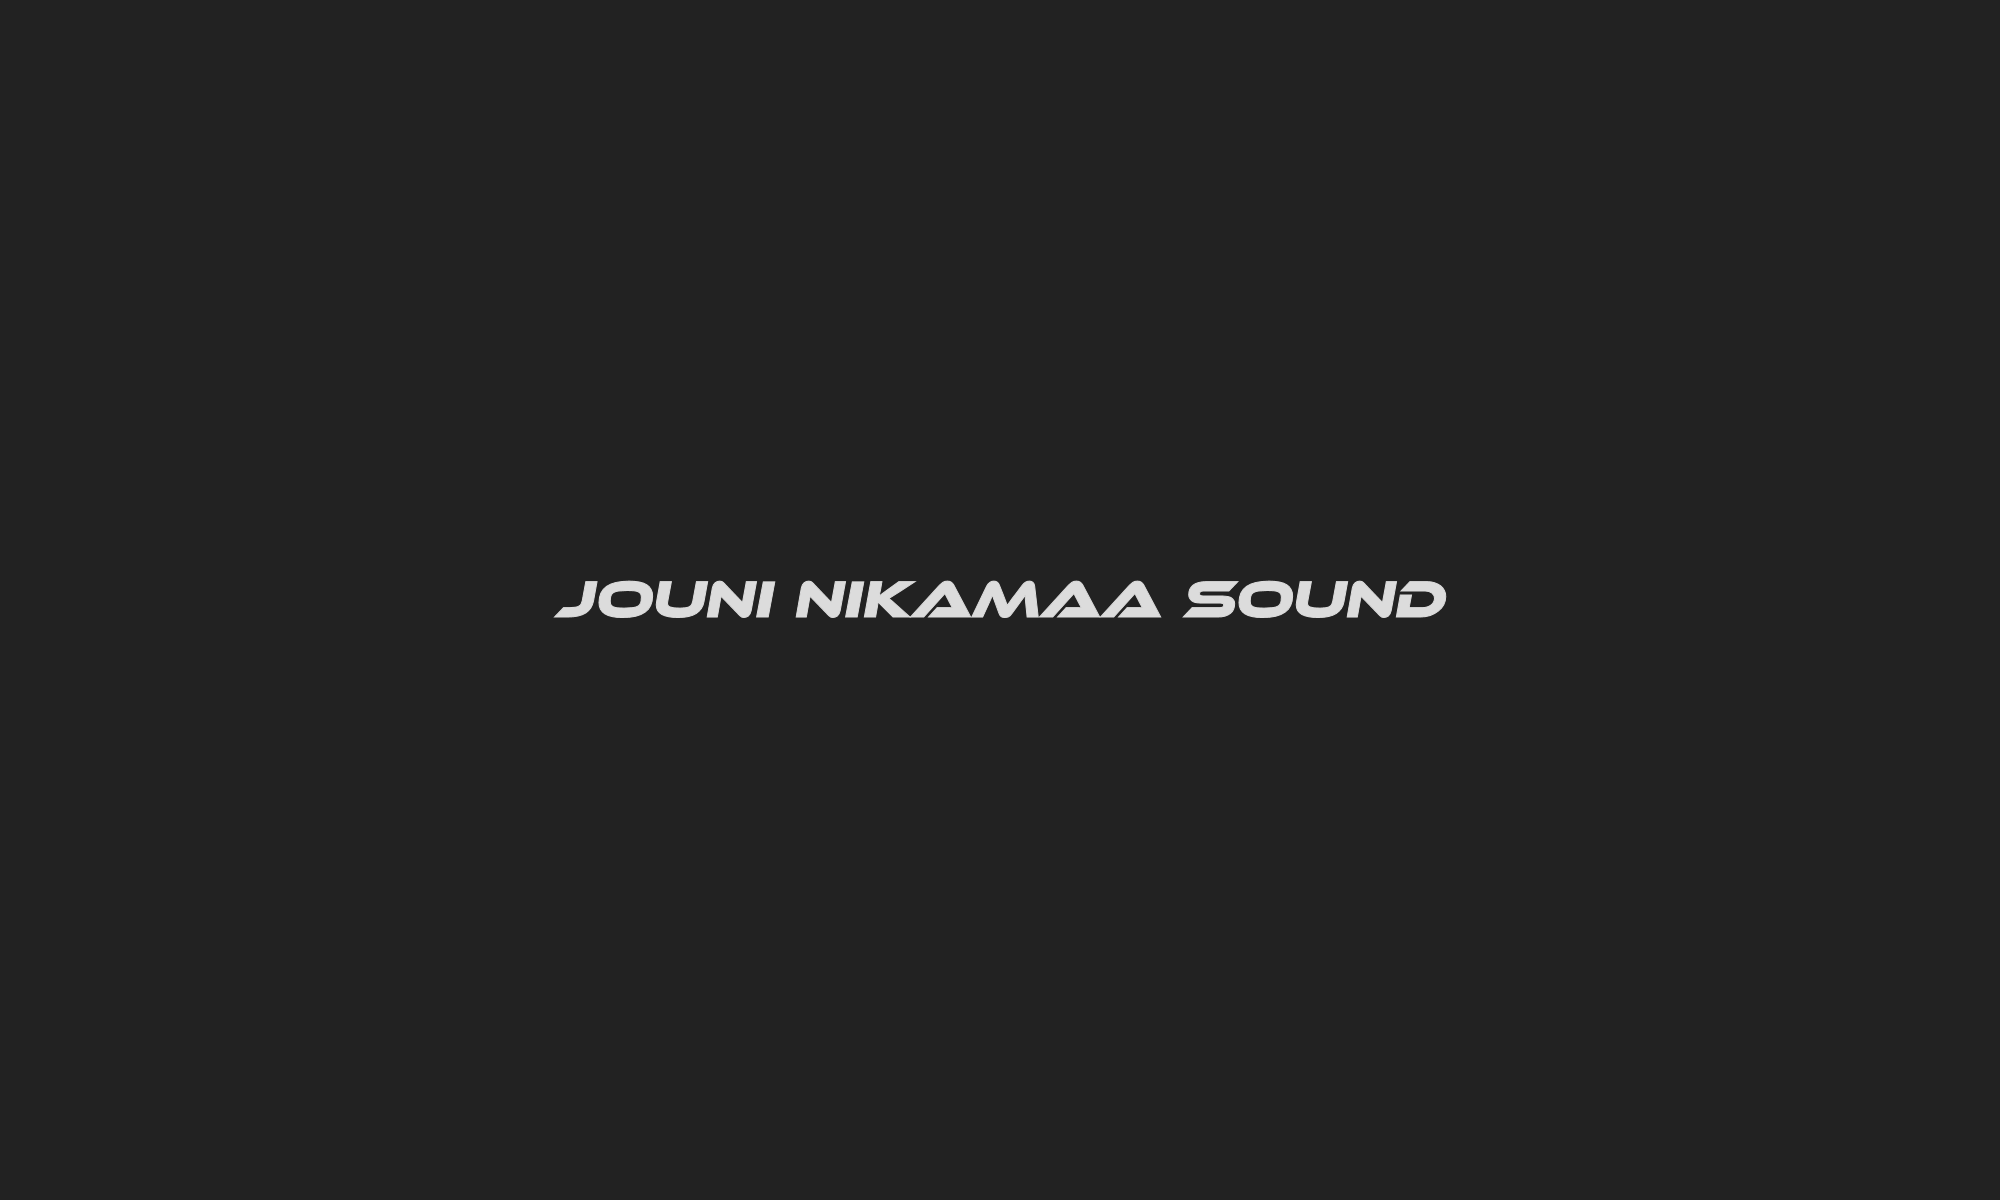 Jouni Nikamaa Sound